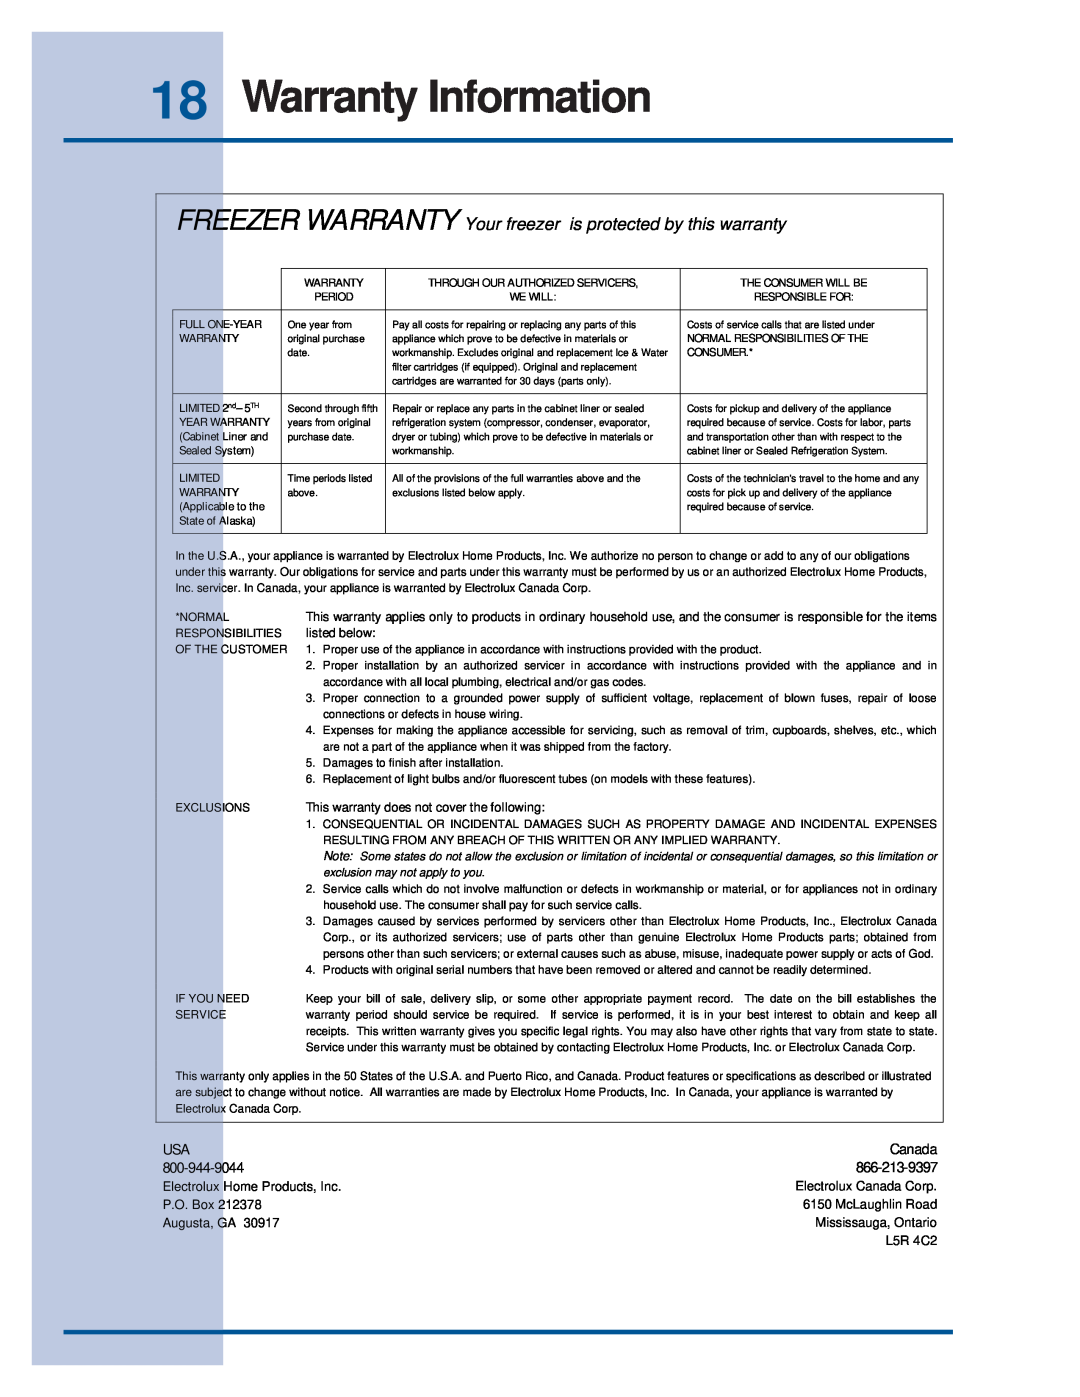 Electrolux Refrigerator manual Warranty Information, FREEZER WARRANTY Your freezer is protected by this warranty, Canada 